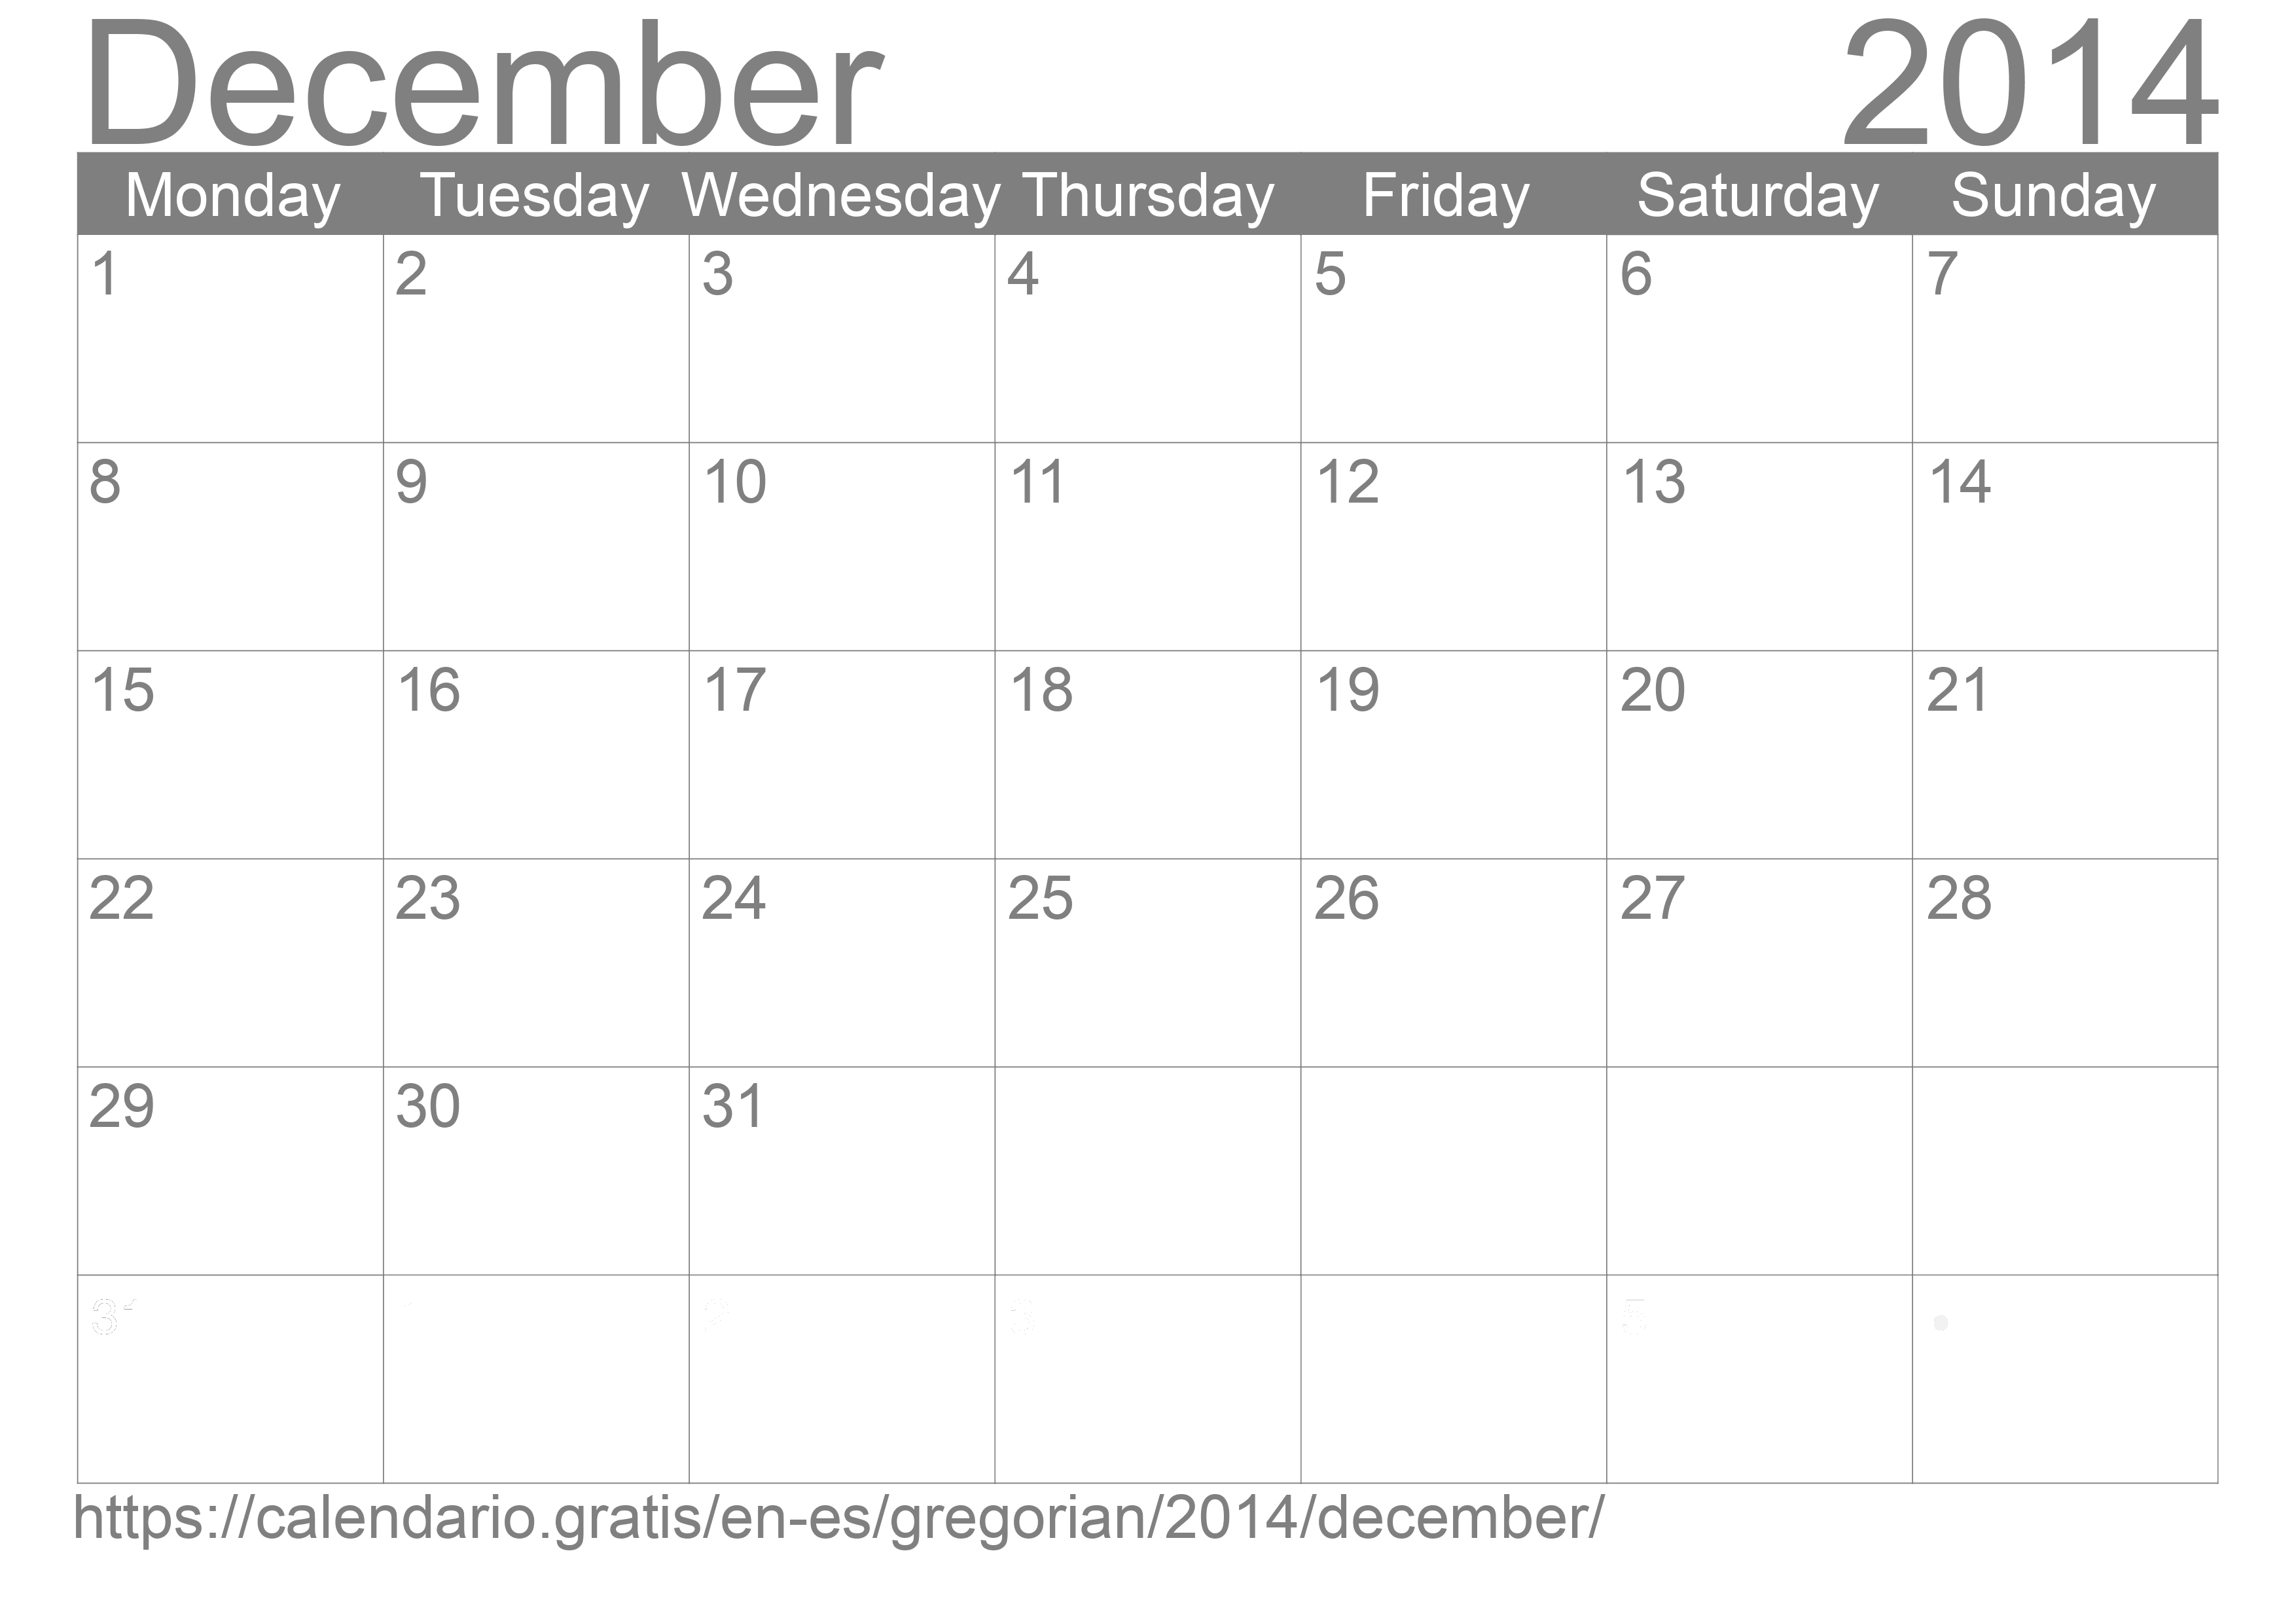 Calendar December 2014 to print